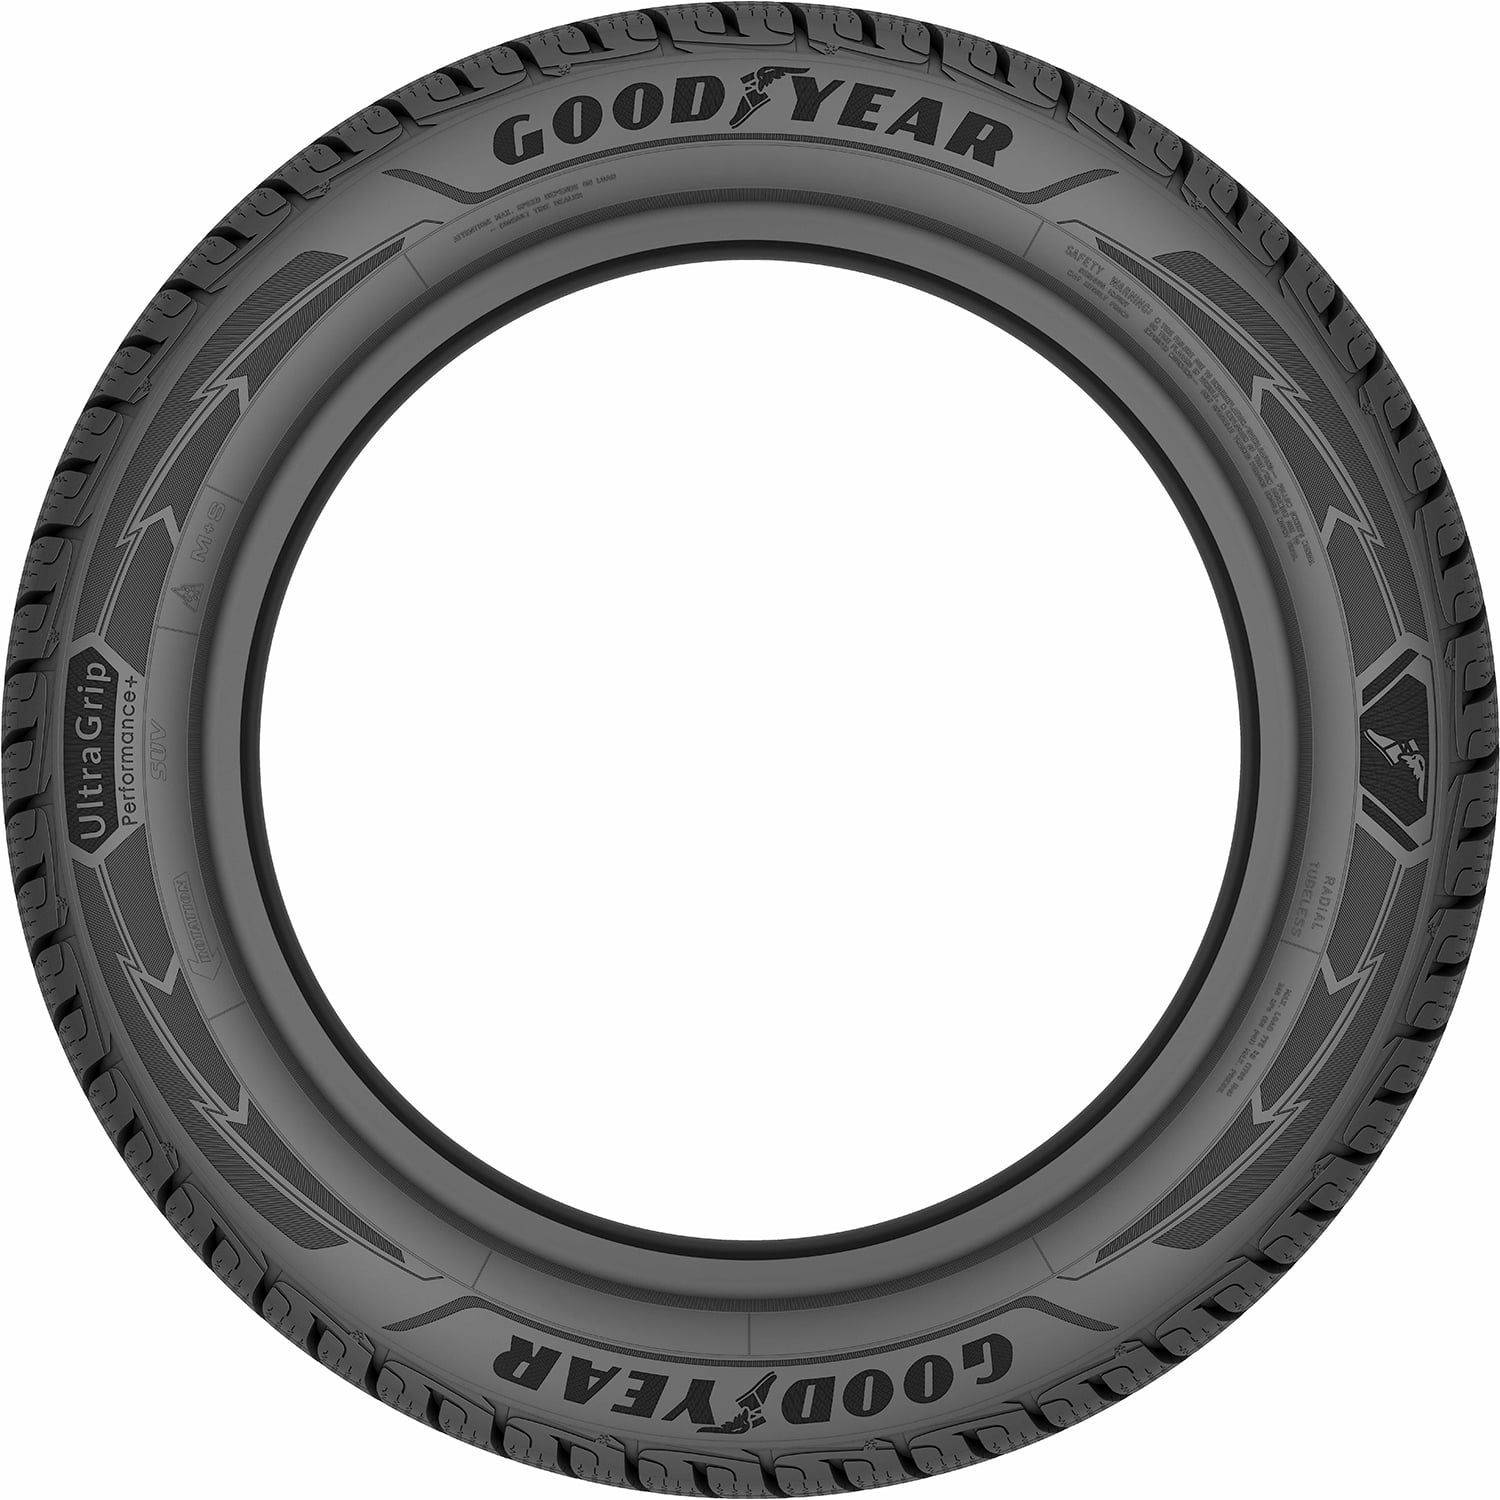 SUV Goodyear XL Ultra + 100V 215/60R17 Grip Tire Performance Performance